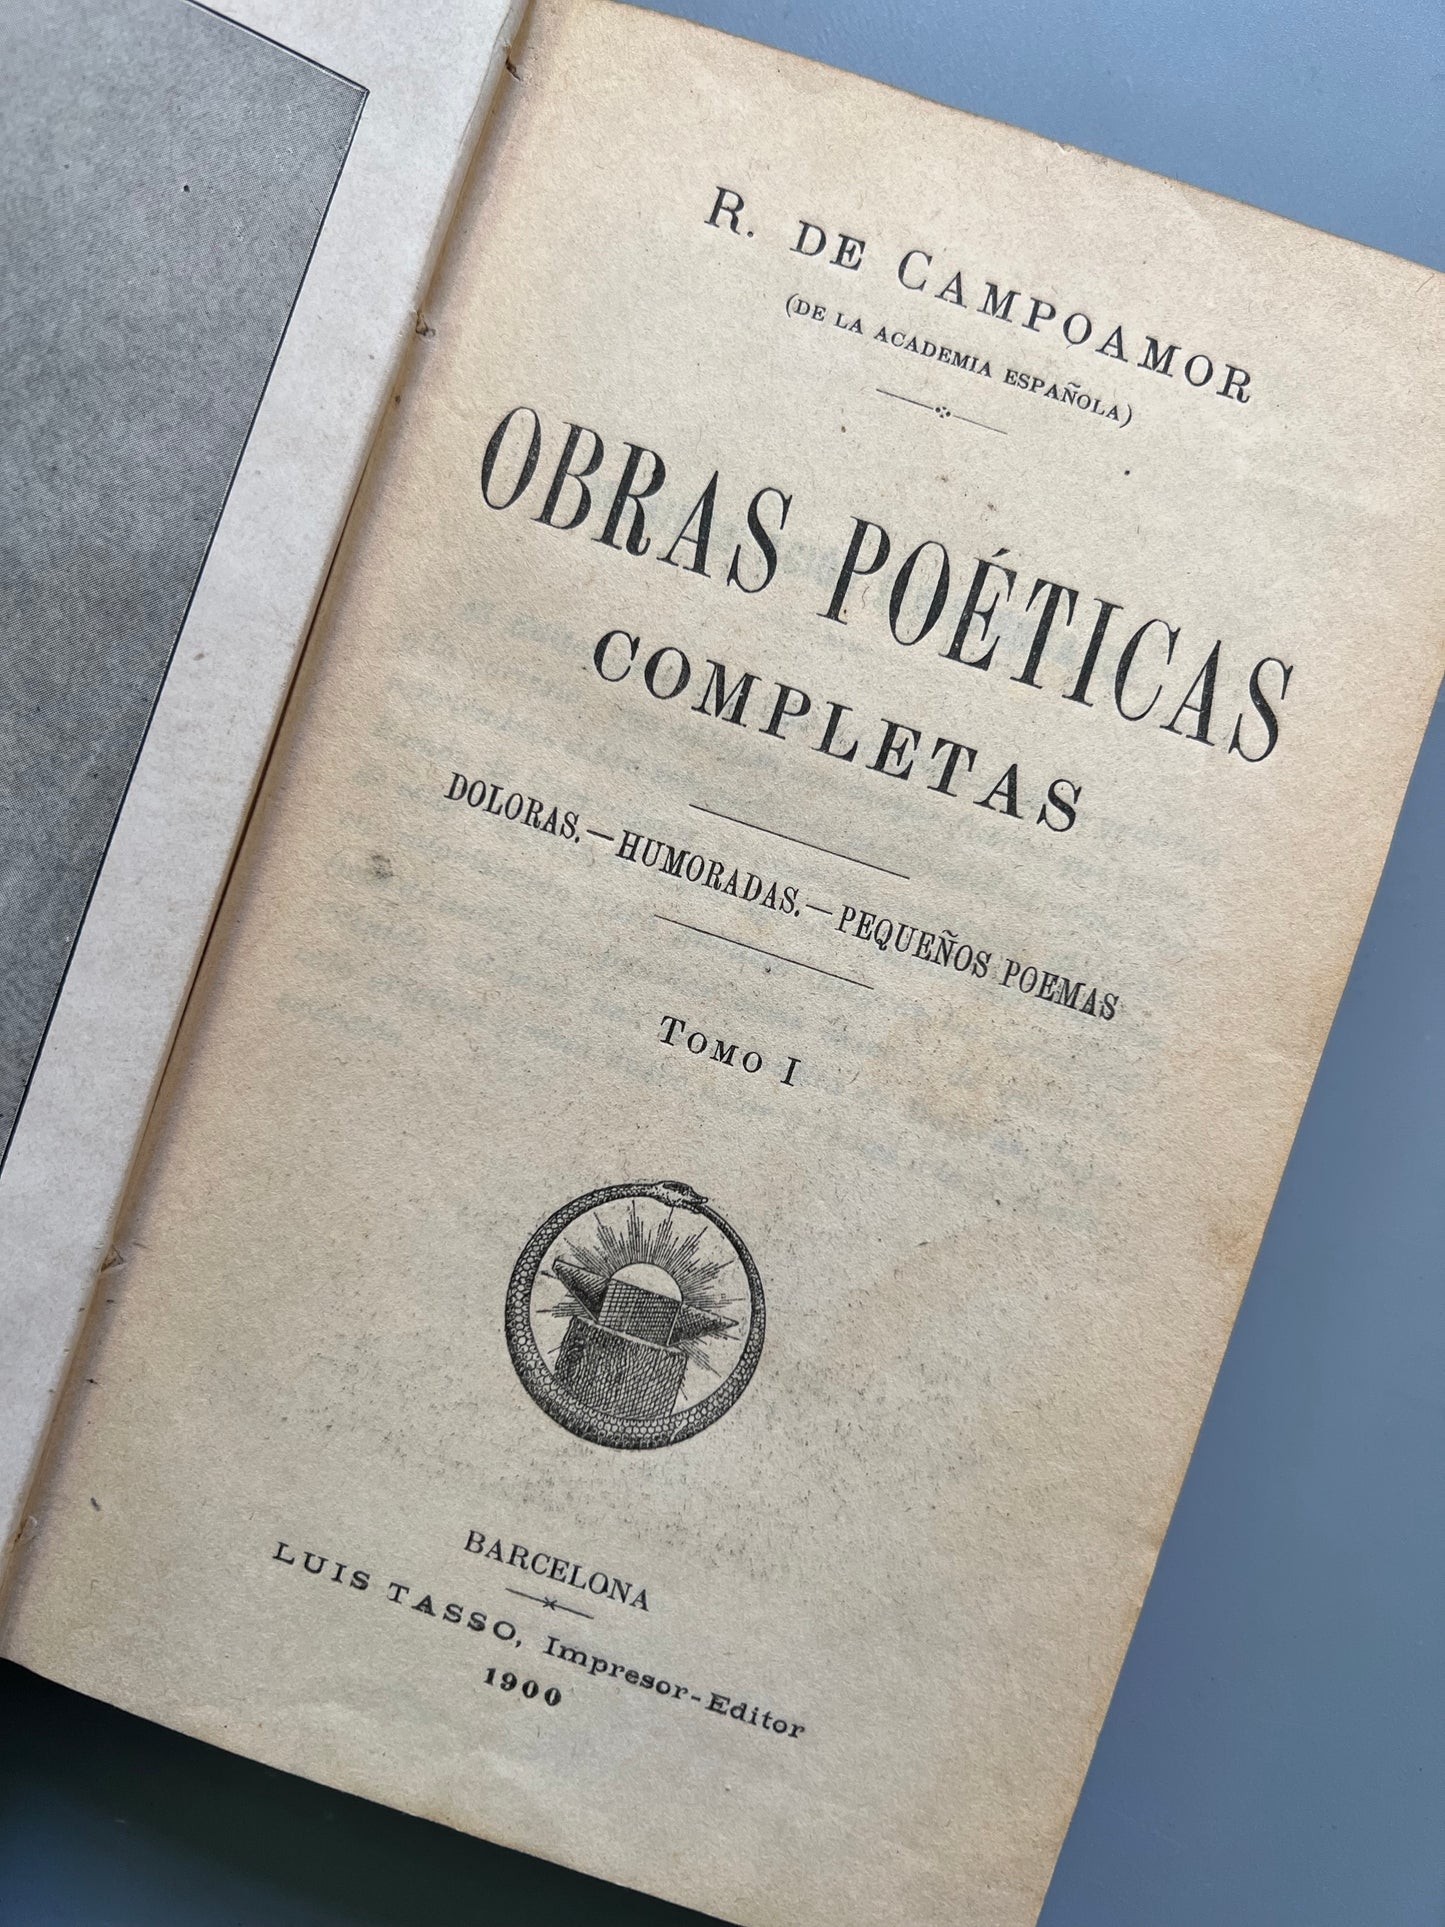 Poesías completas de Campoamor, Ramón de Campoamor - Luis Tasso editor, 1900